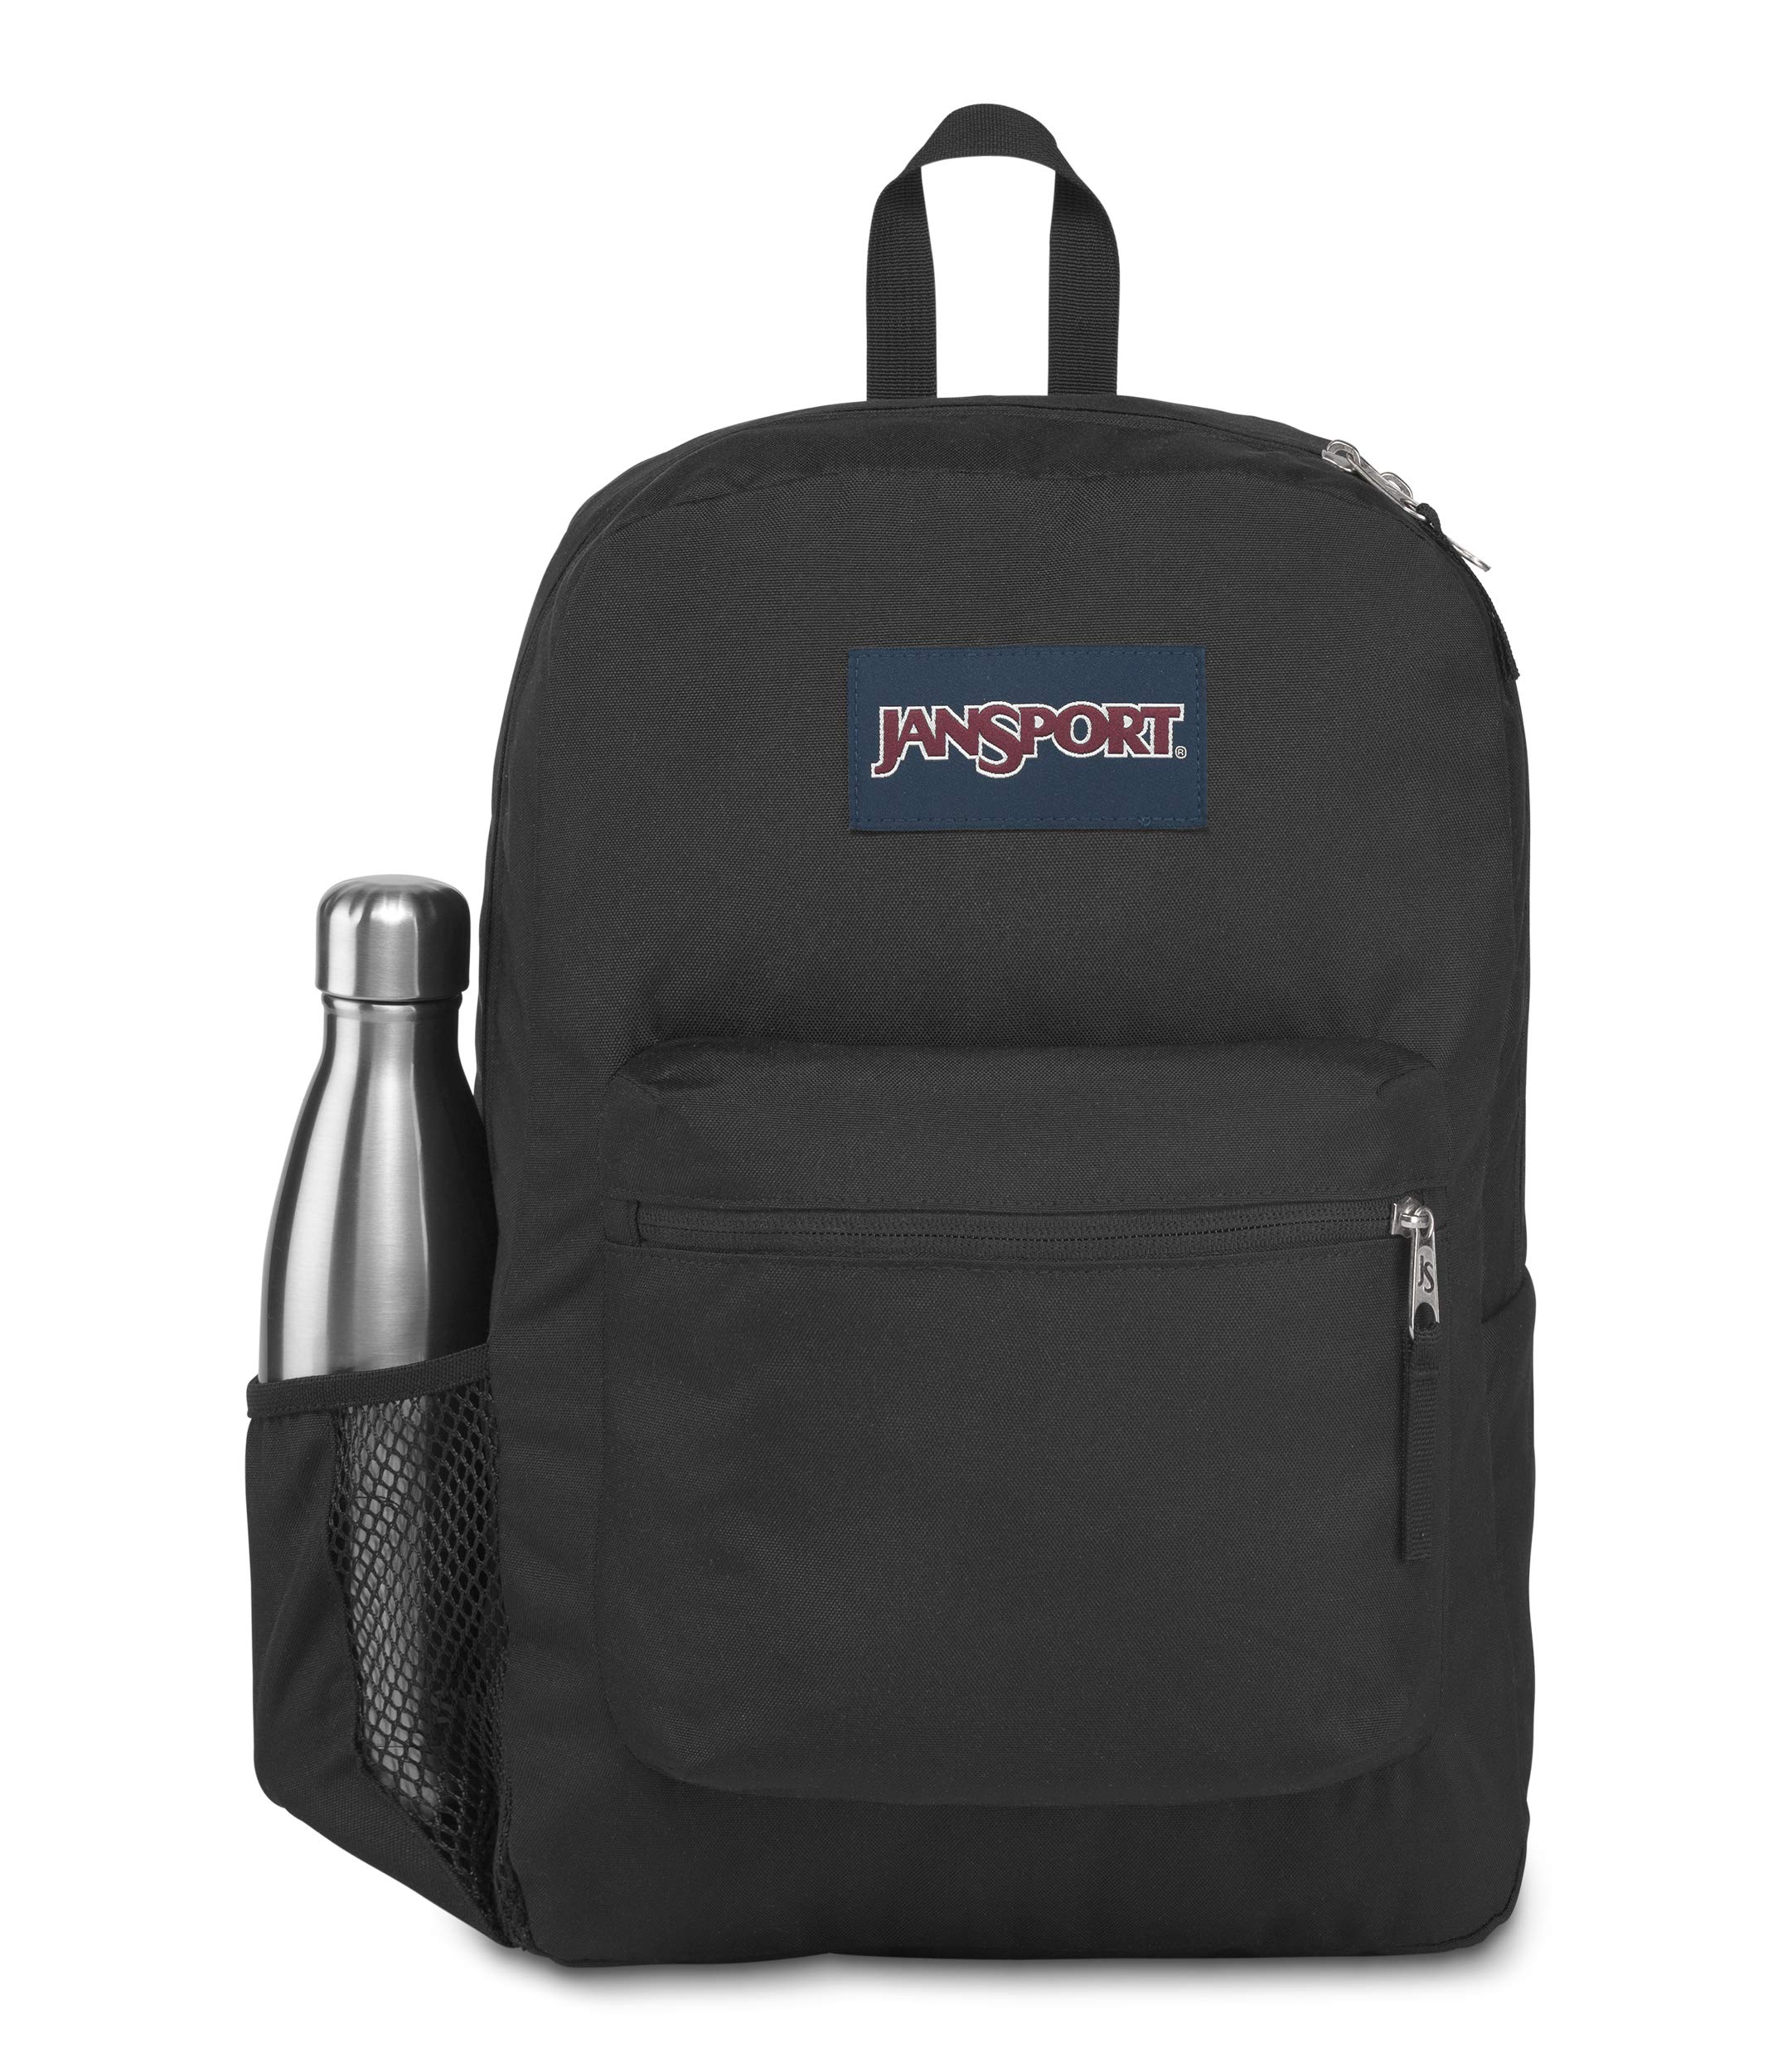 JanSport Cross Town Backpack - Travel, or Work Bookbag with Water Bottle Pocket, Black